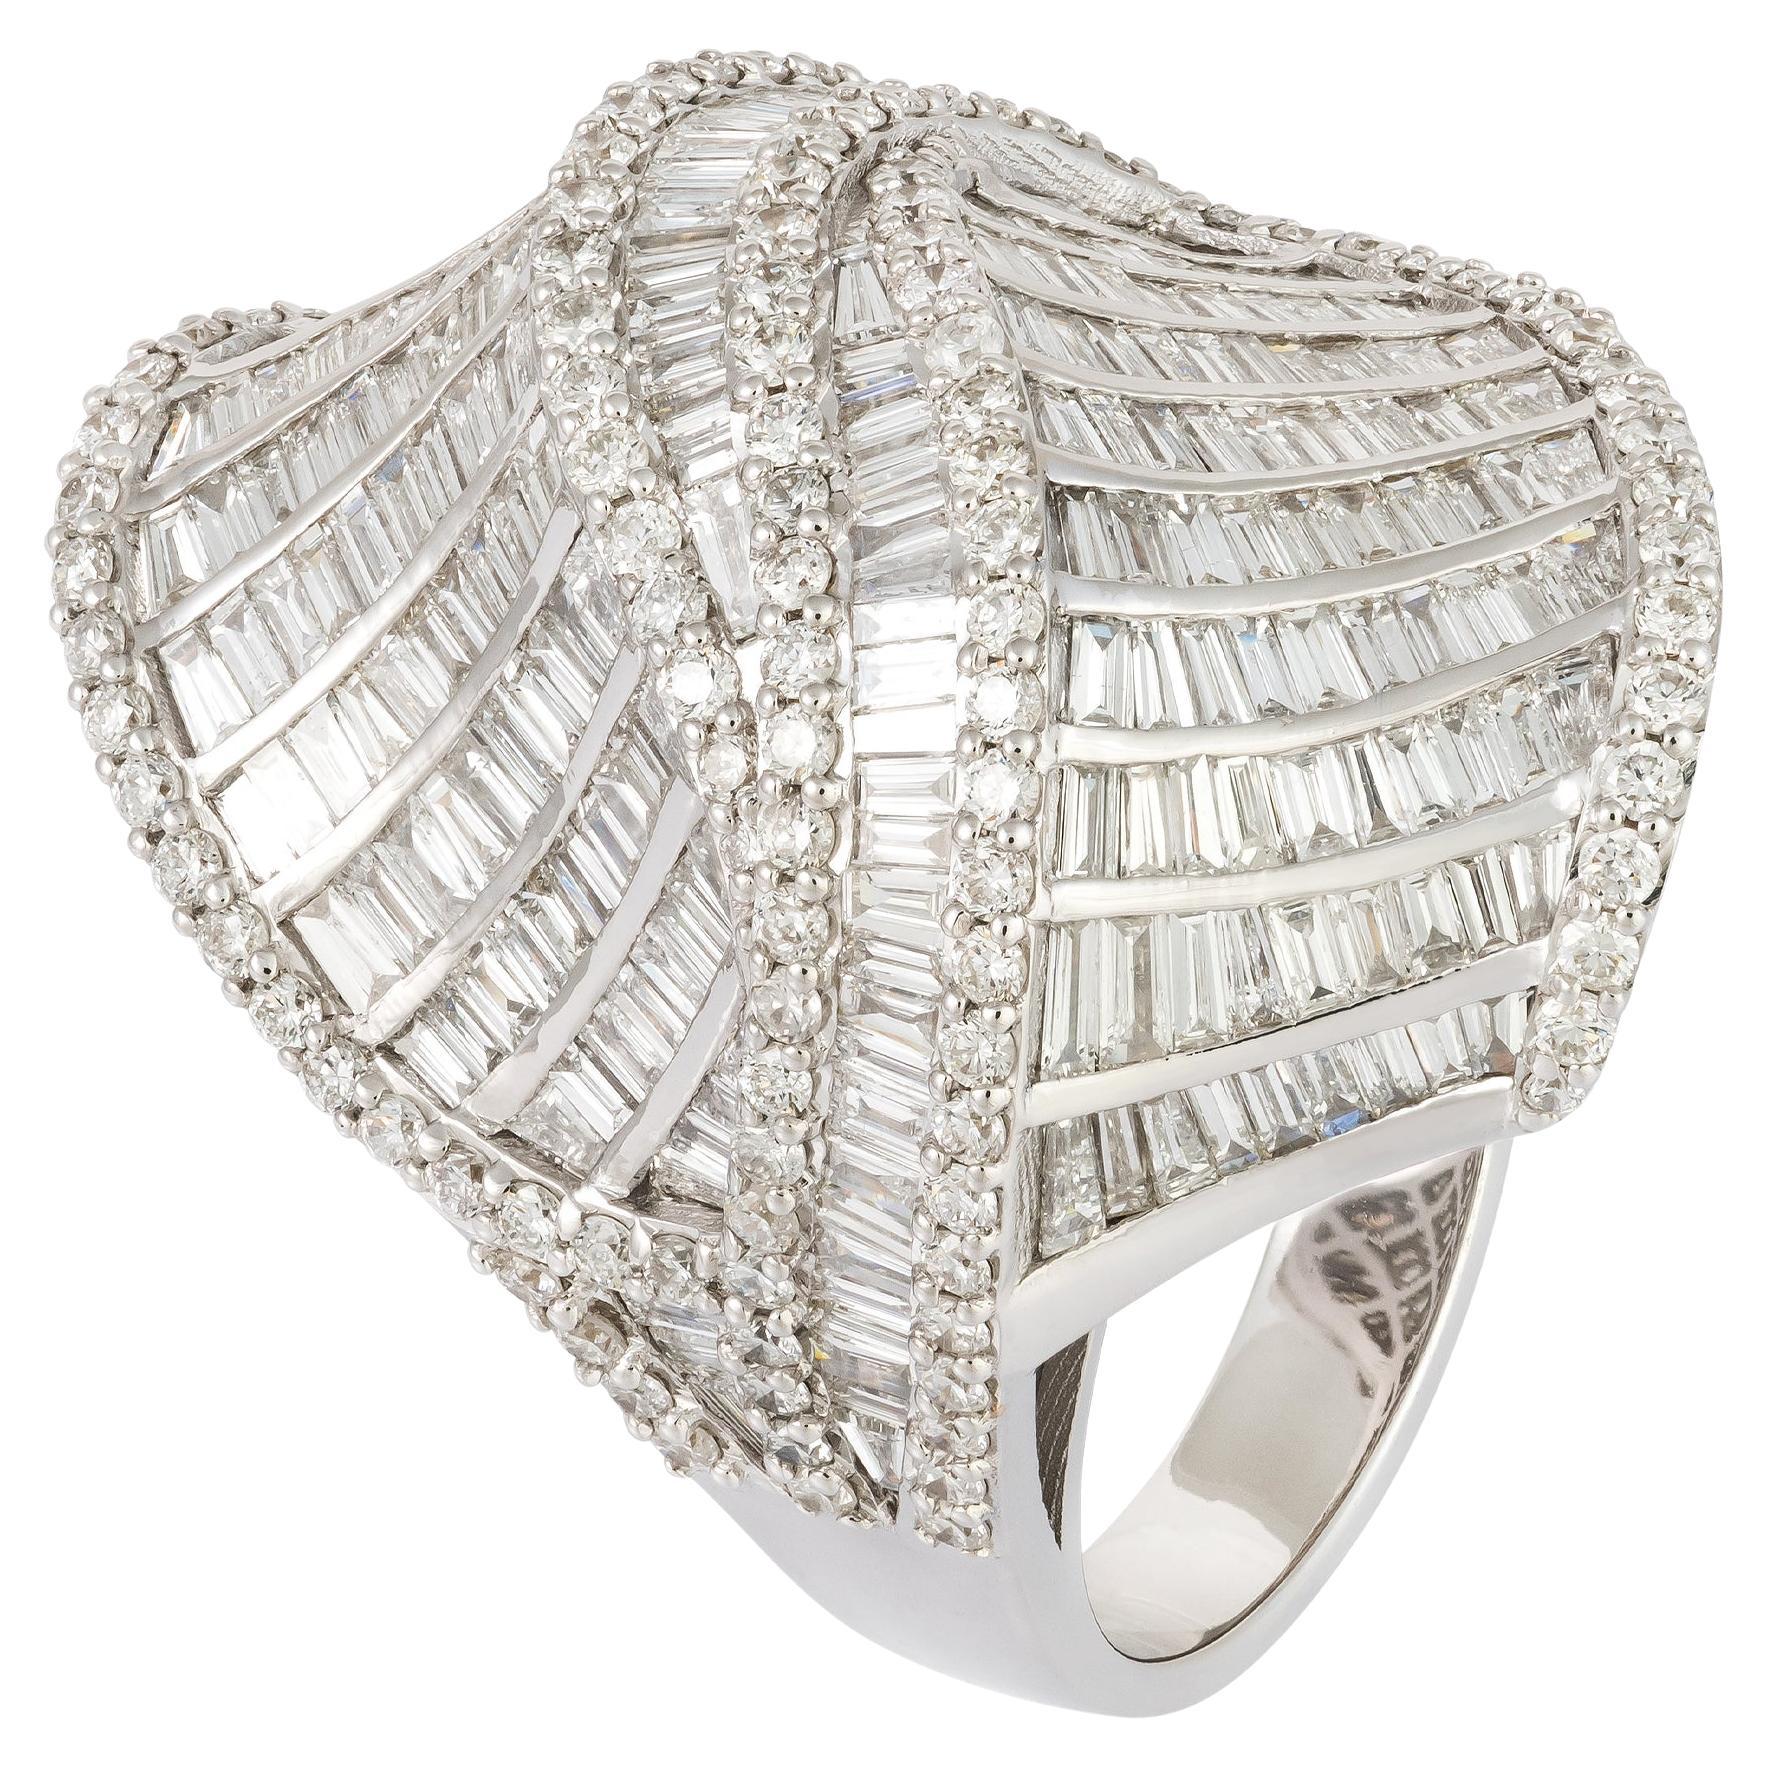 For Sale:  Unique White 18K Gold White Diamond Ring for Her